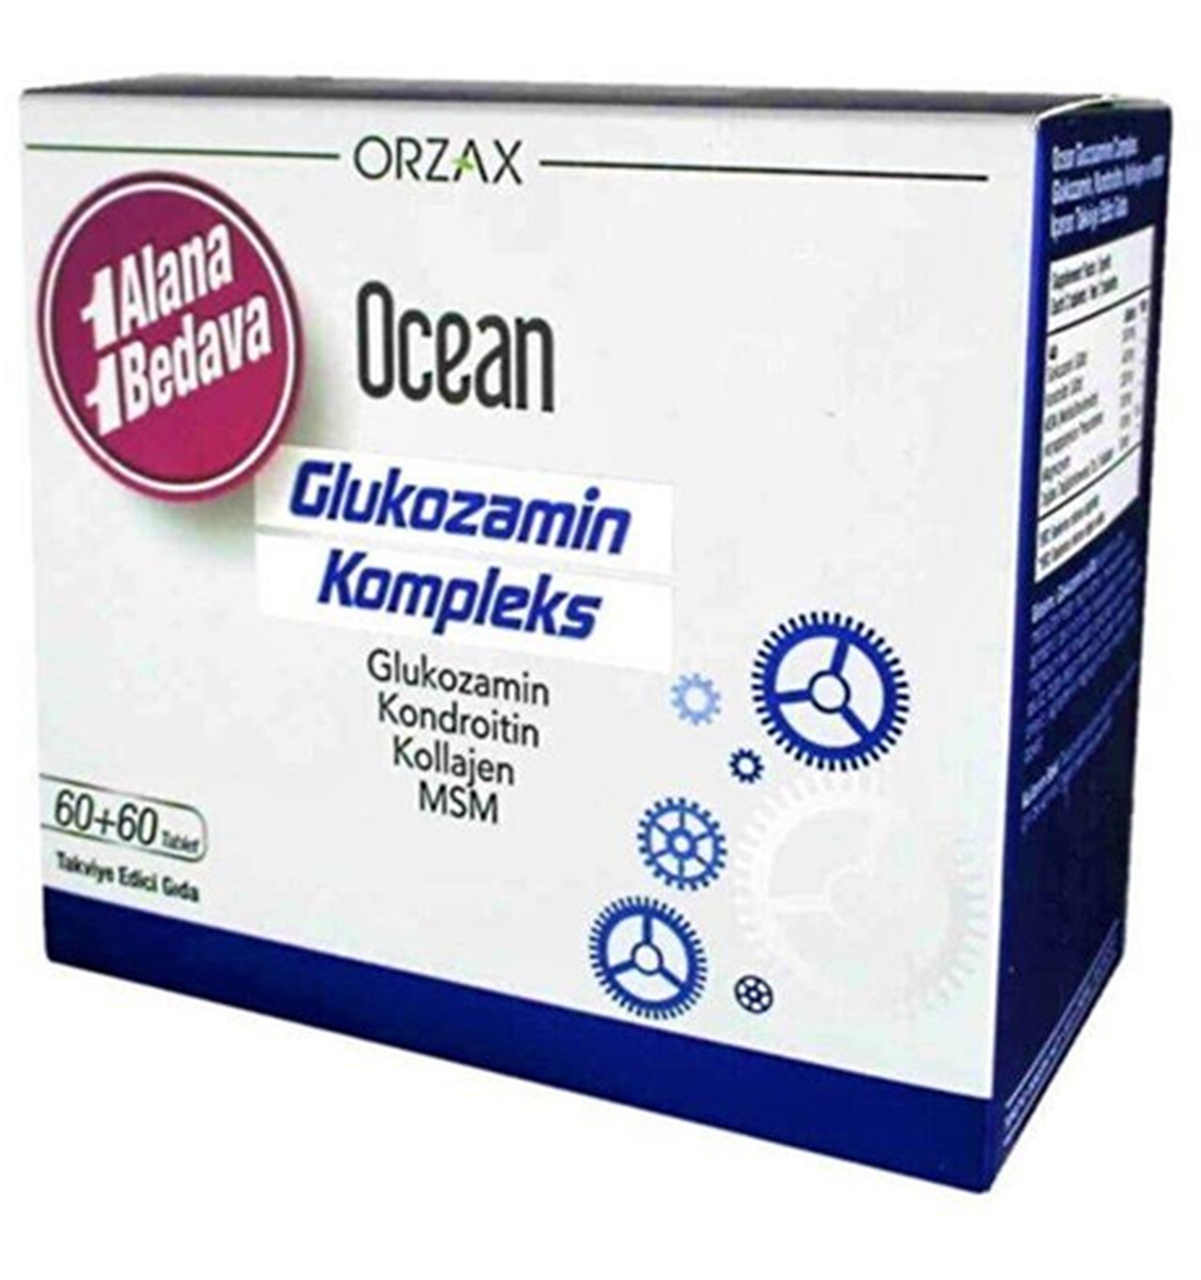 Orzax Ocean Glukozamin Kompleks 60 Tablet  2 Kutu